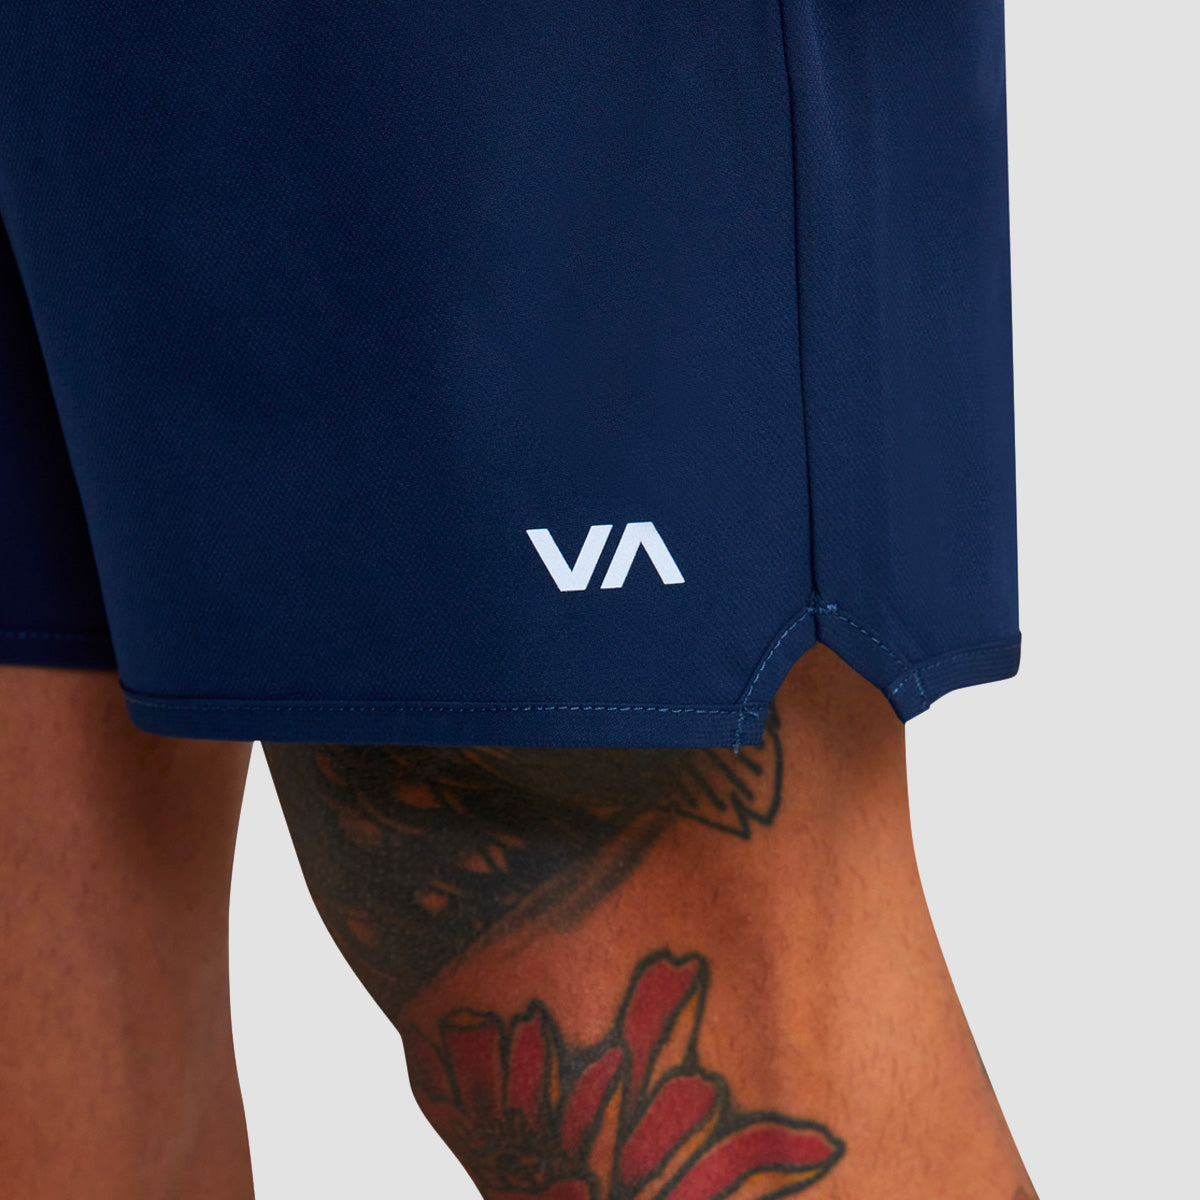 RVCA VA Sport Yogger Stretch 17" Shorts Midnight